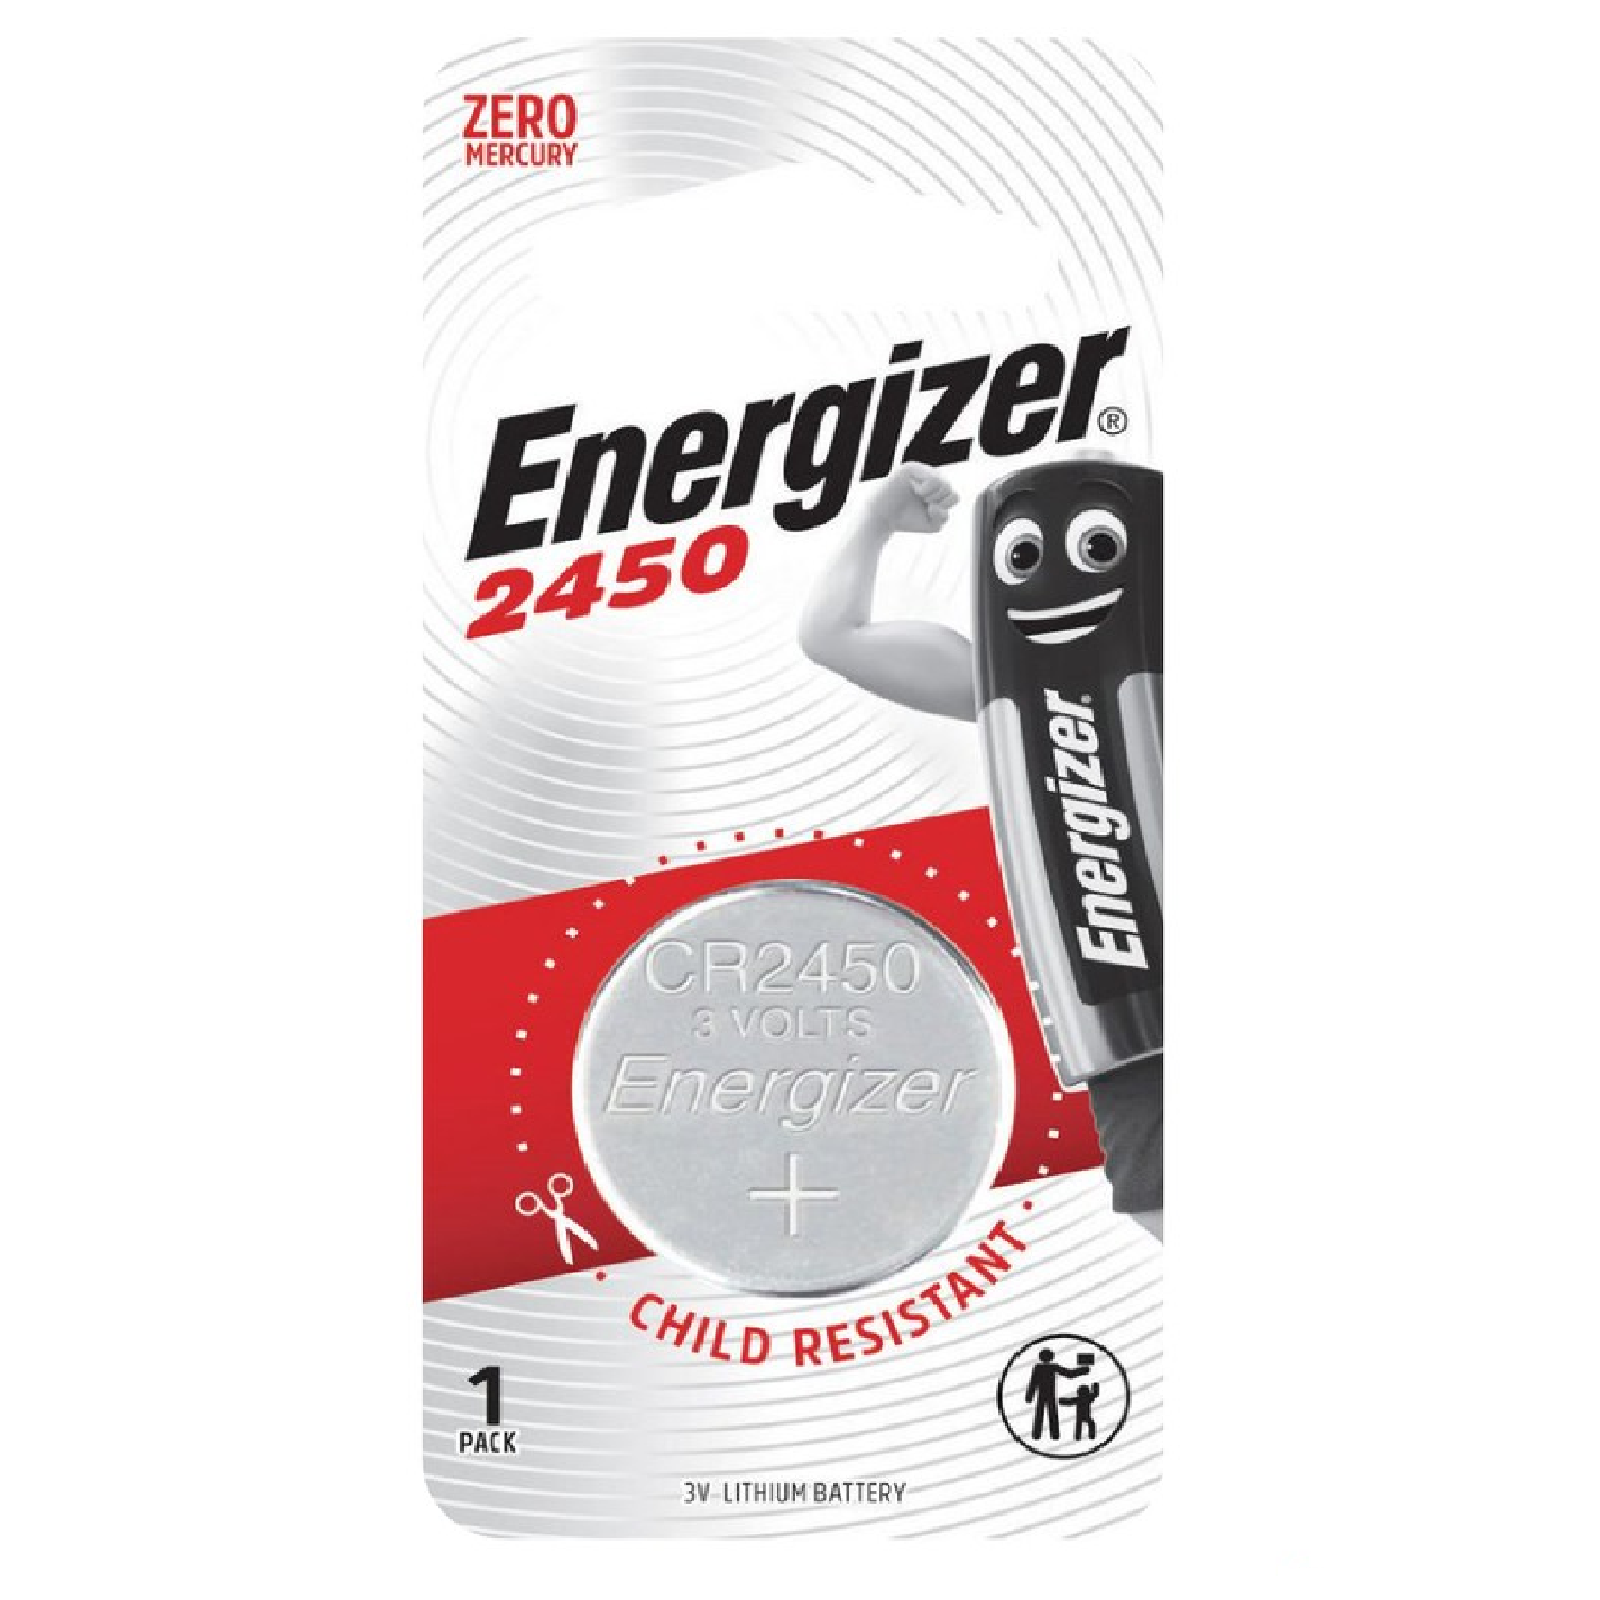 Energizer CR2450 LITHIUM BATTERY 3V 1PC/Pack